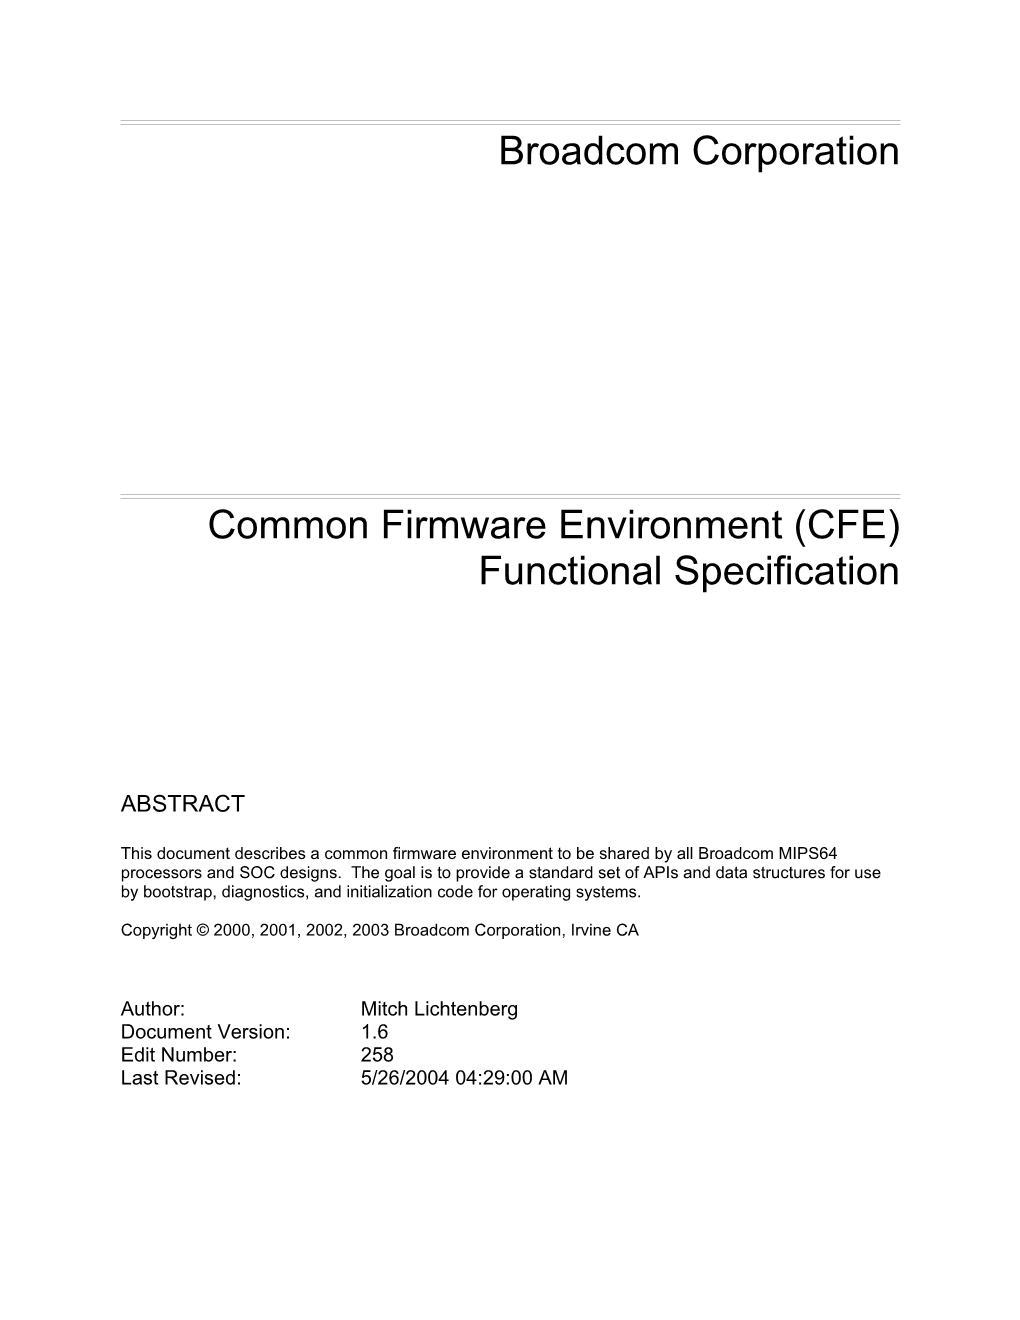 Common Firmware Environment (CFE)